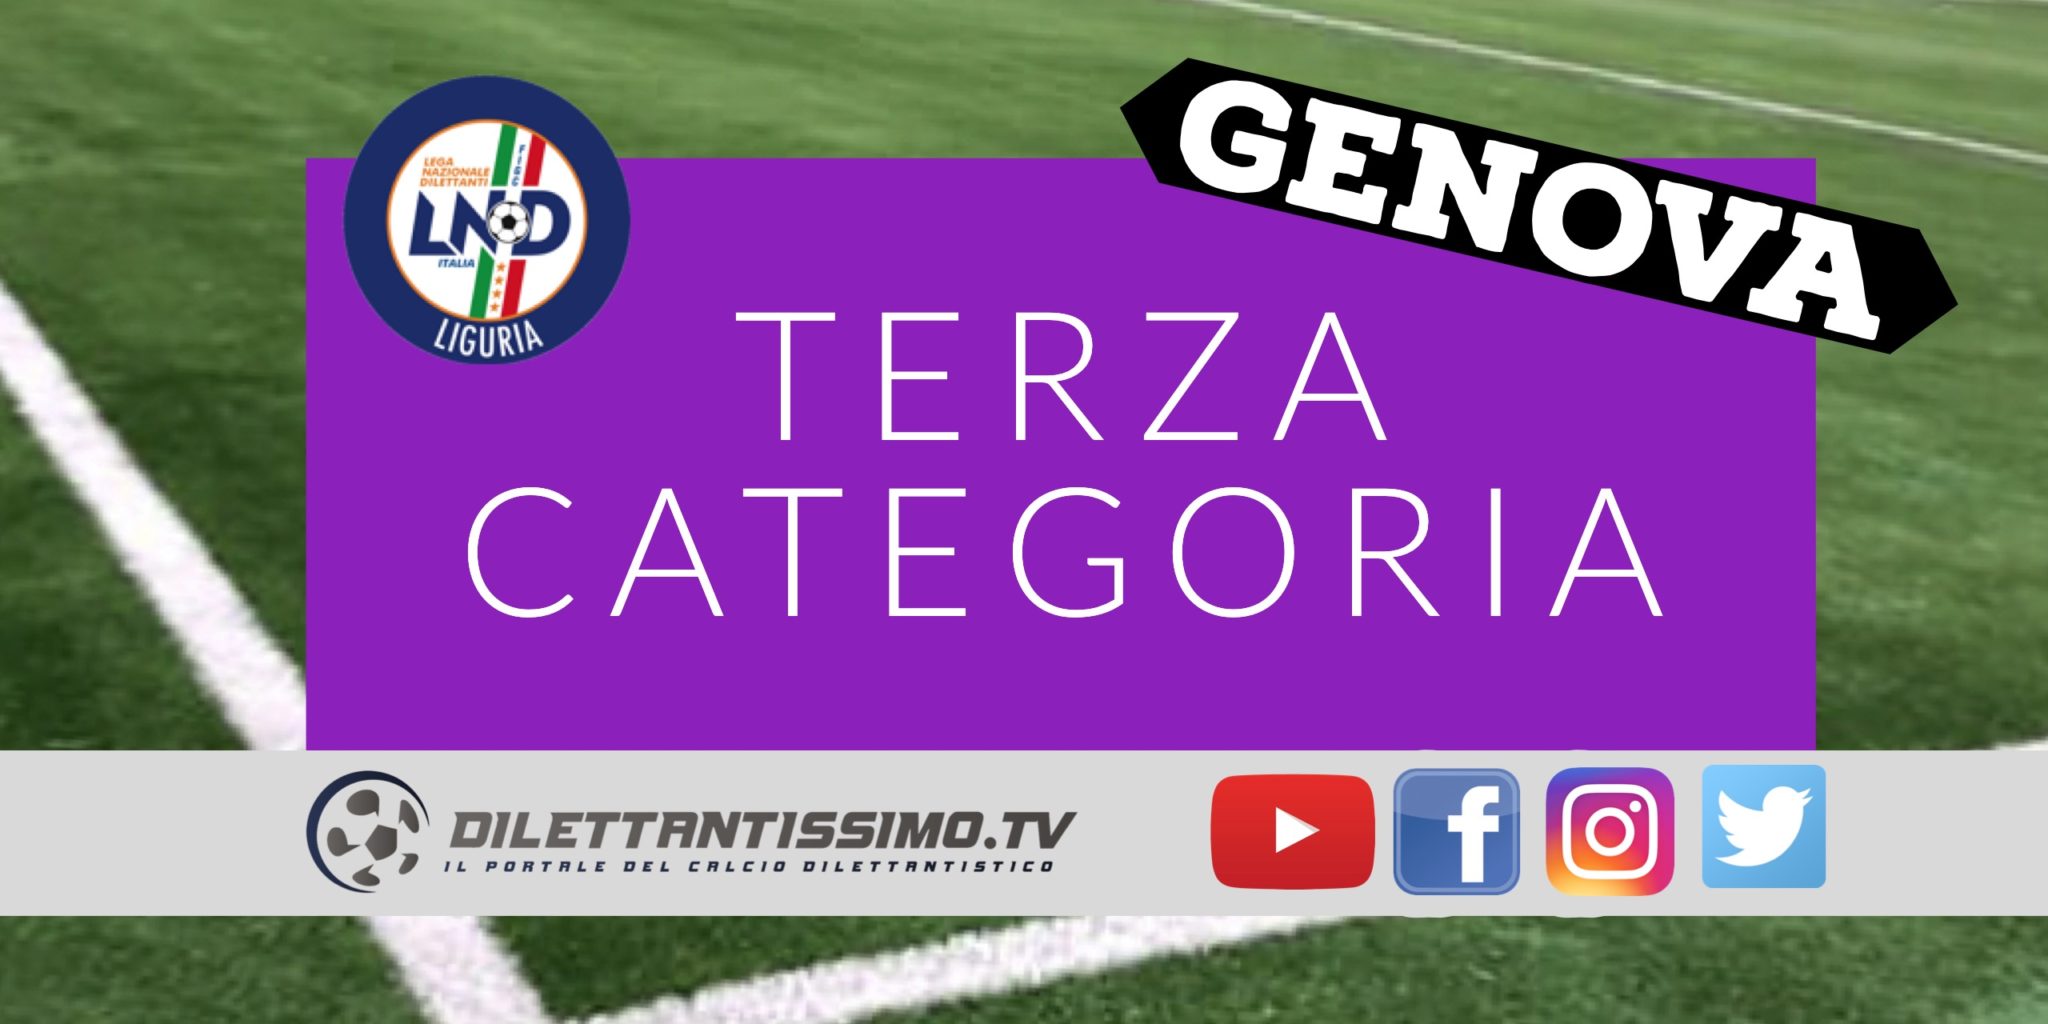 DIRETTA LIVE – TERZA CATEGORIA 13ª GIORNATA